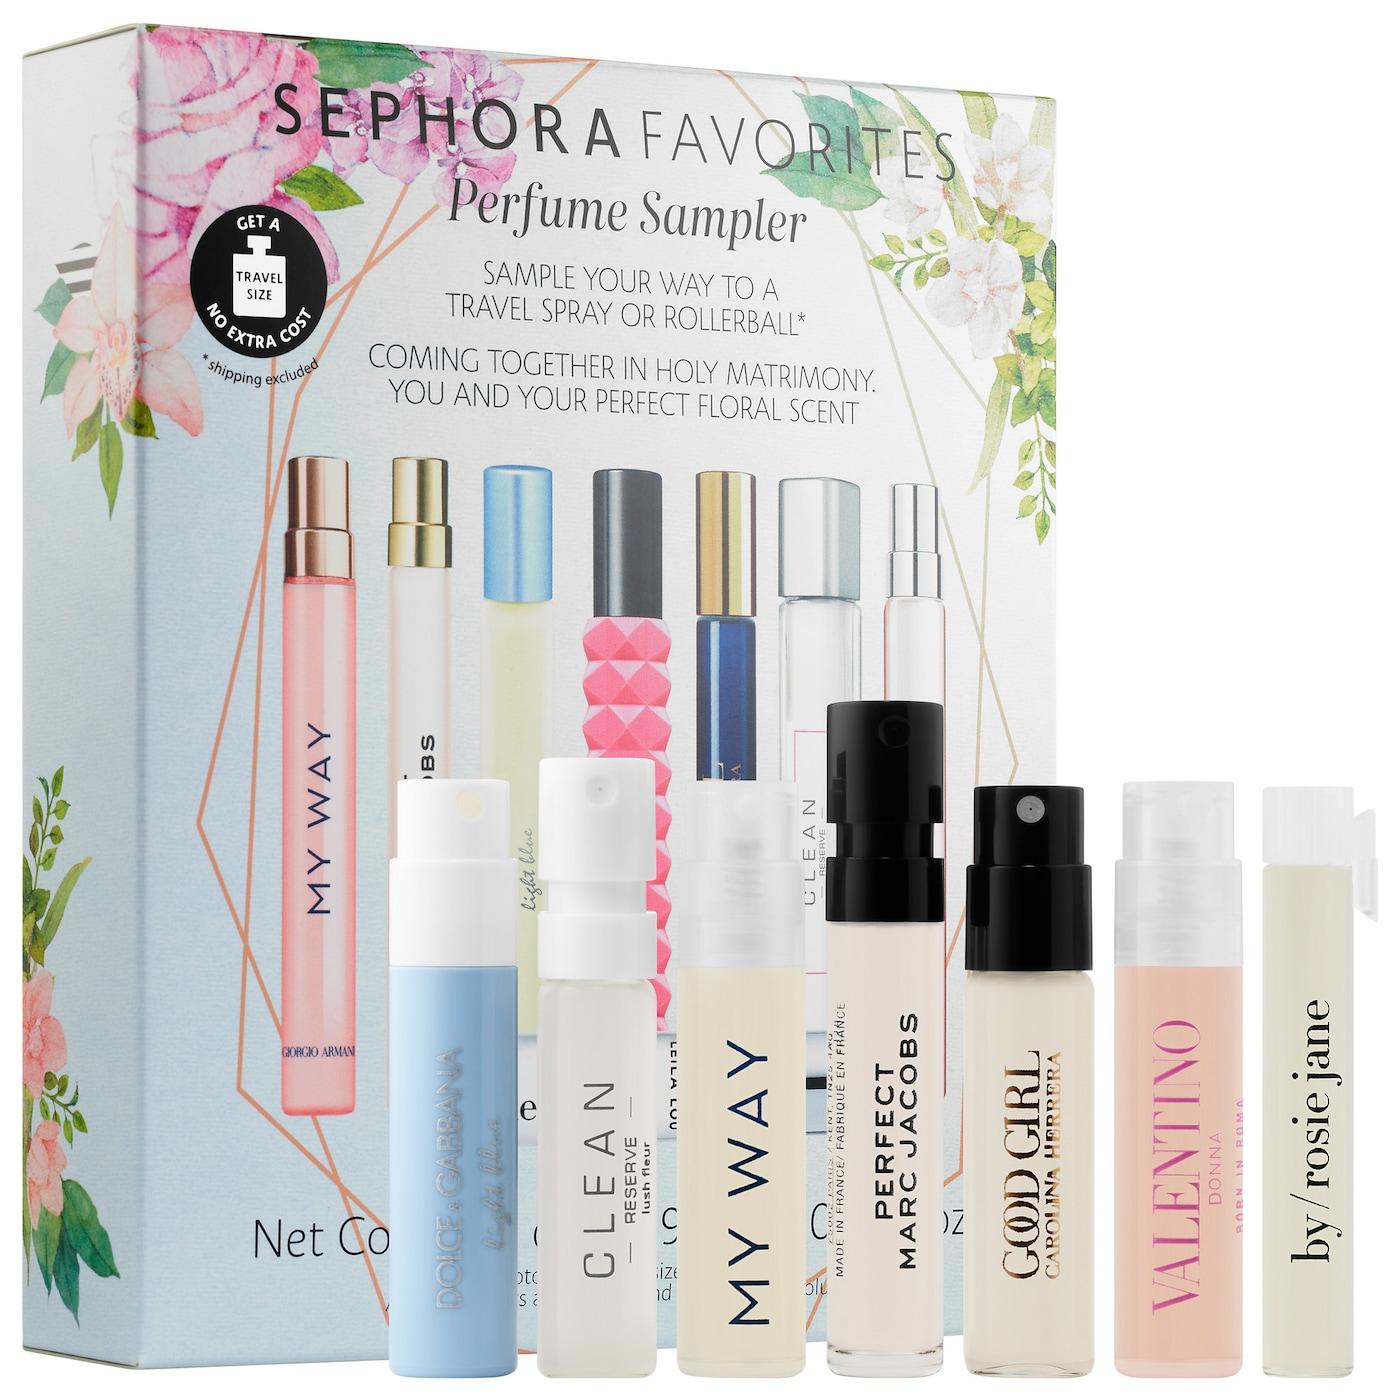 Sephora Favorites Bestselling Floral Perfume Sampler Set – Now Available